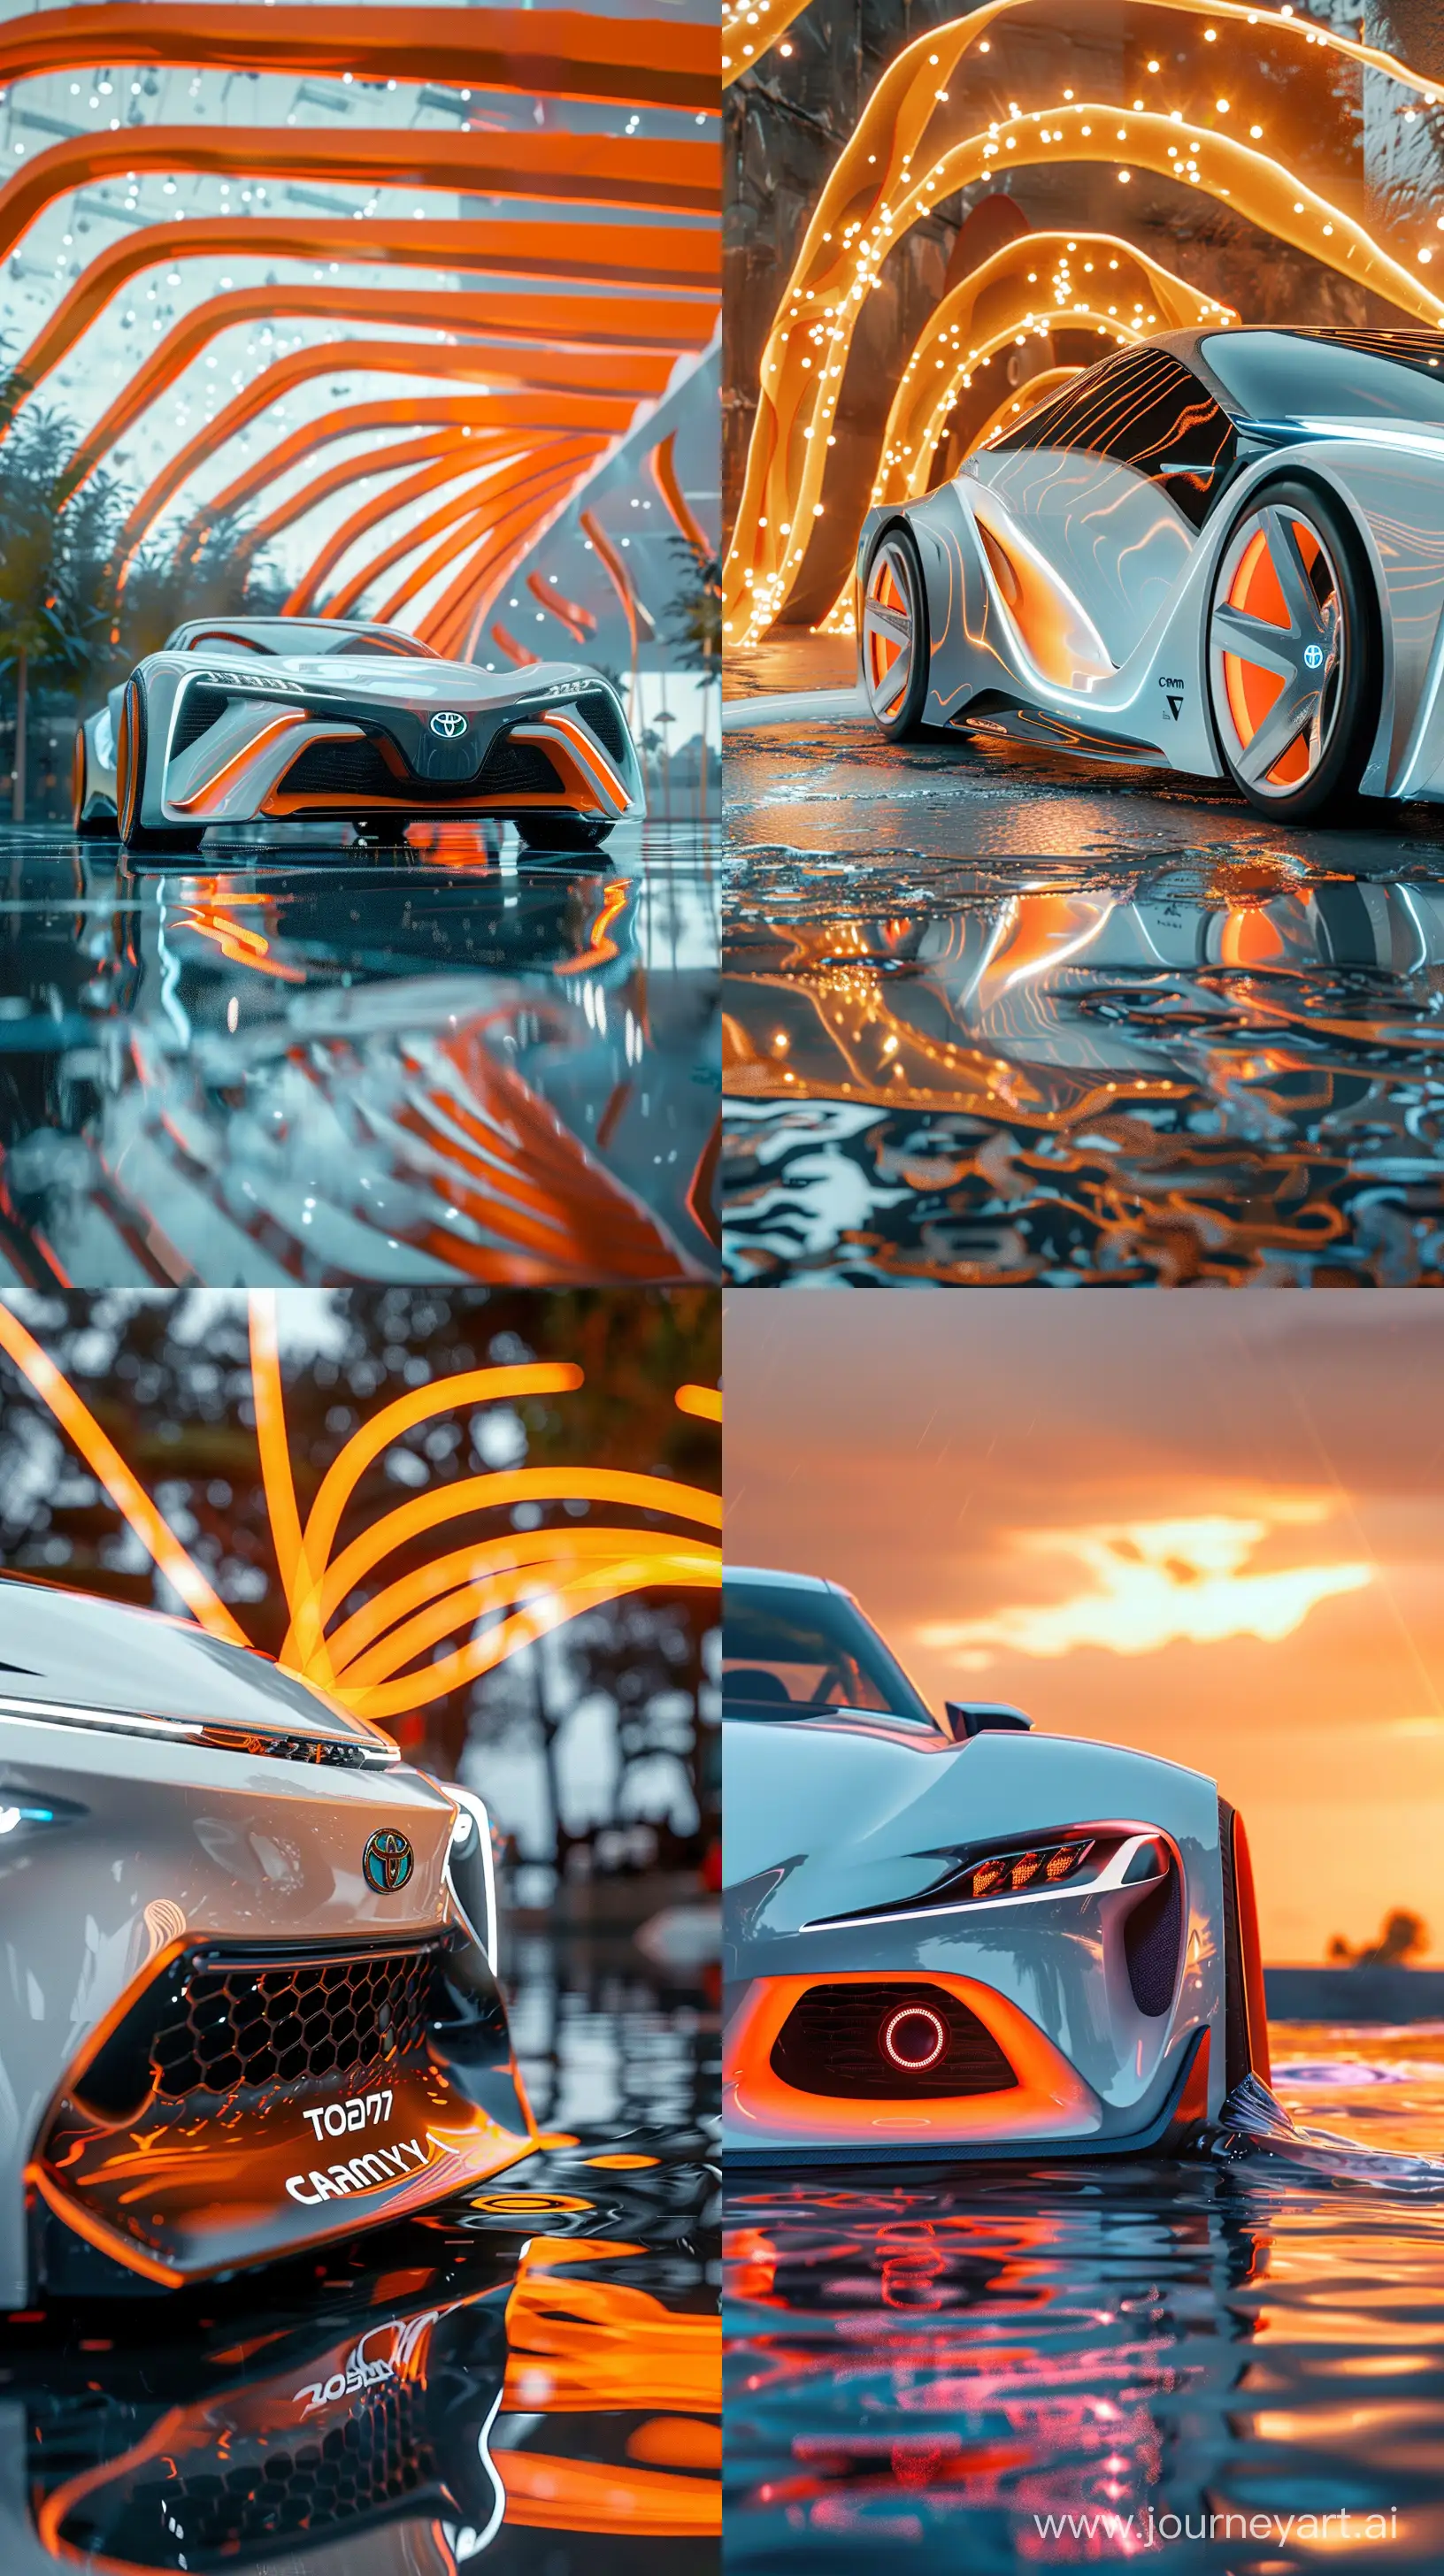 Realistic-Fantasy-Toyota-Camry-V7-Futurist-Concept-Photo-with-Vibrant-White-and-Orange-Lighting